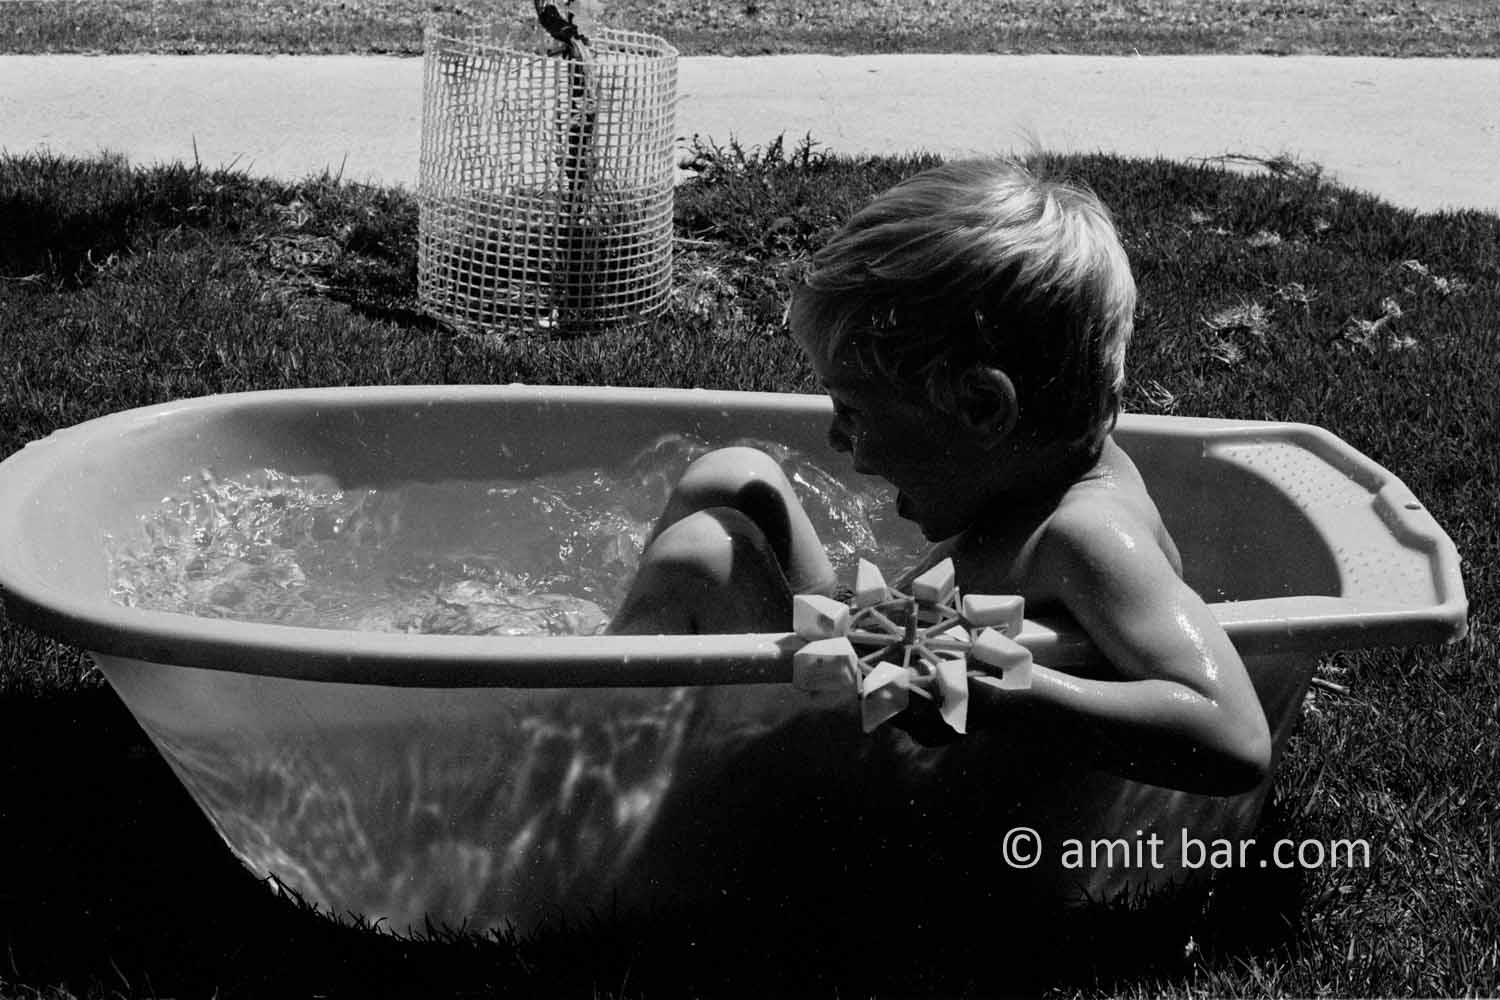 Playing in bath III: A child is plaing in bath